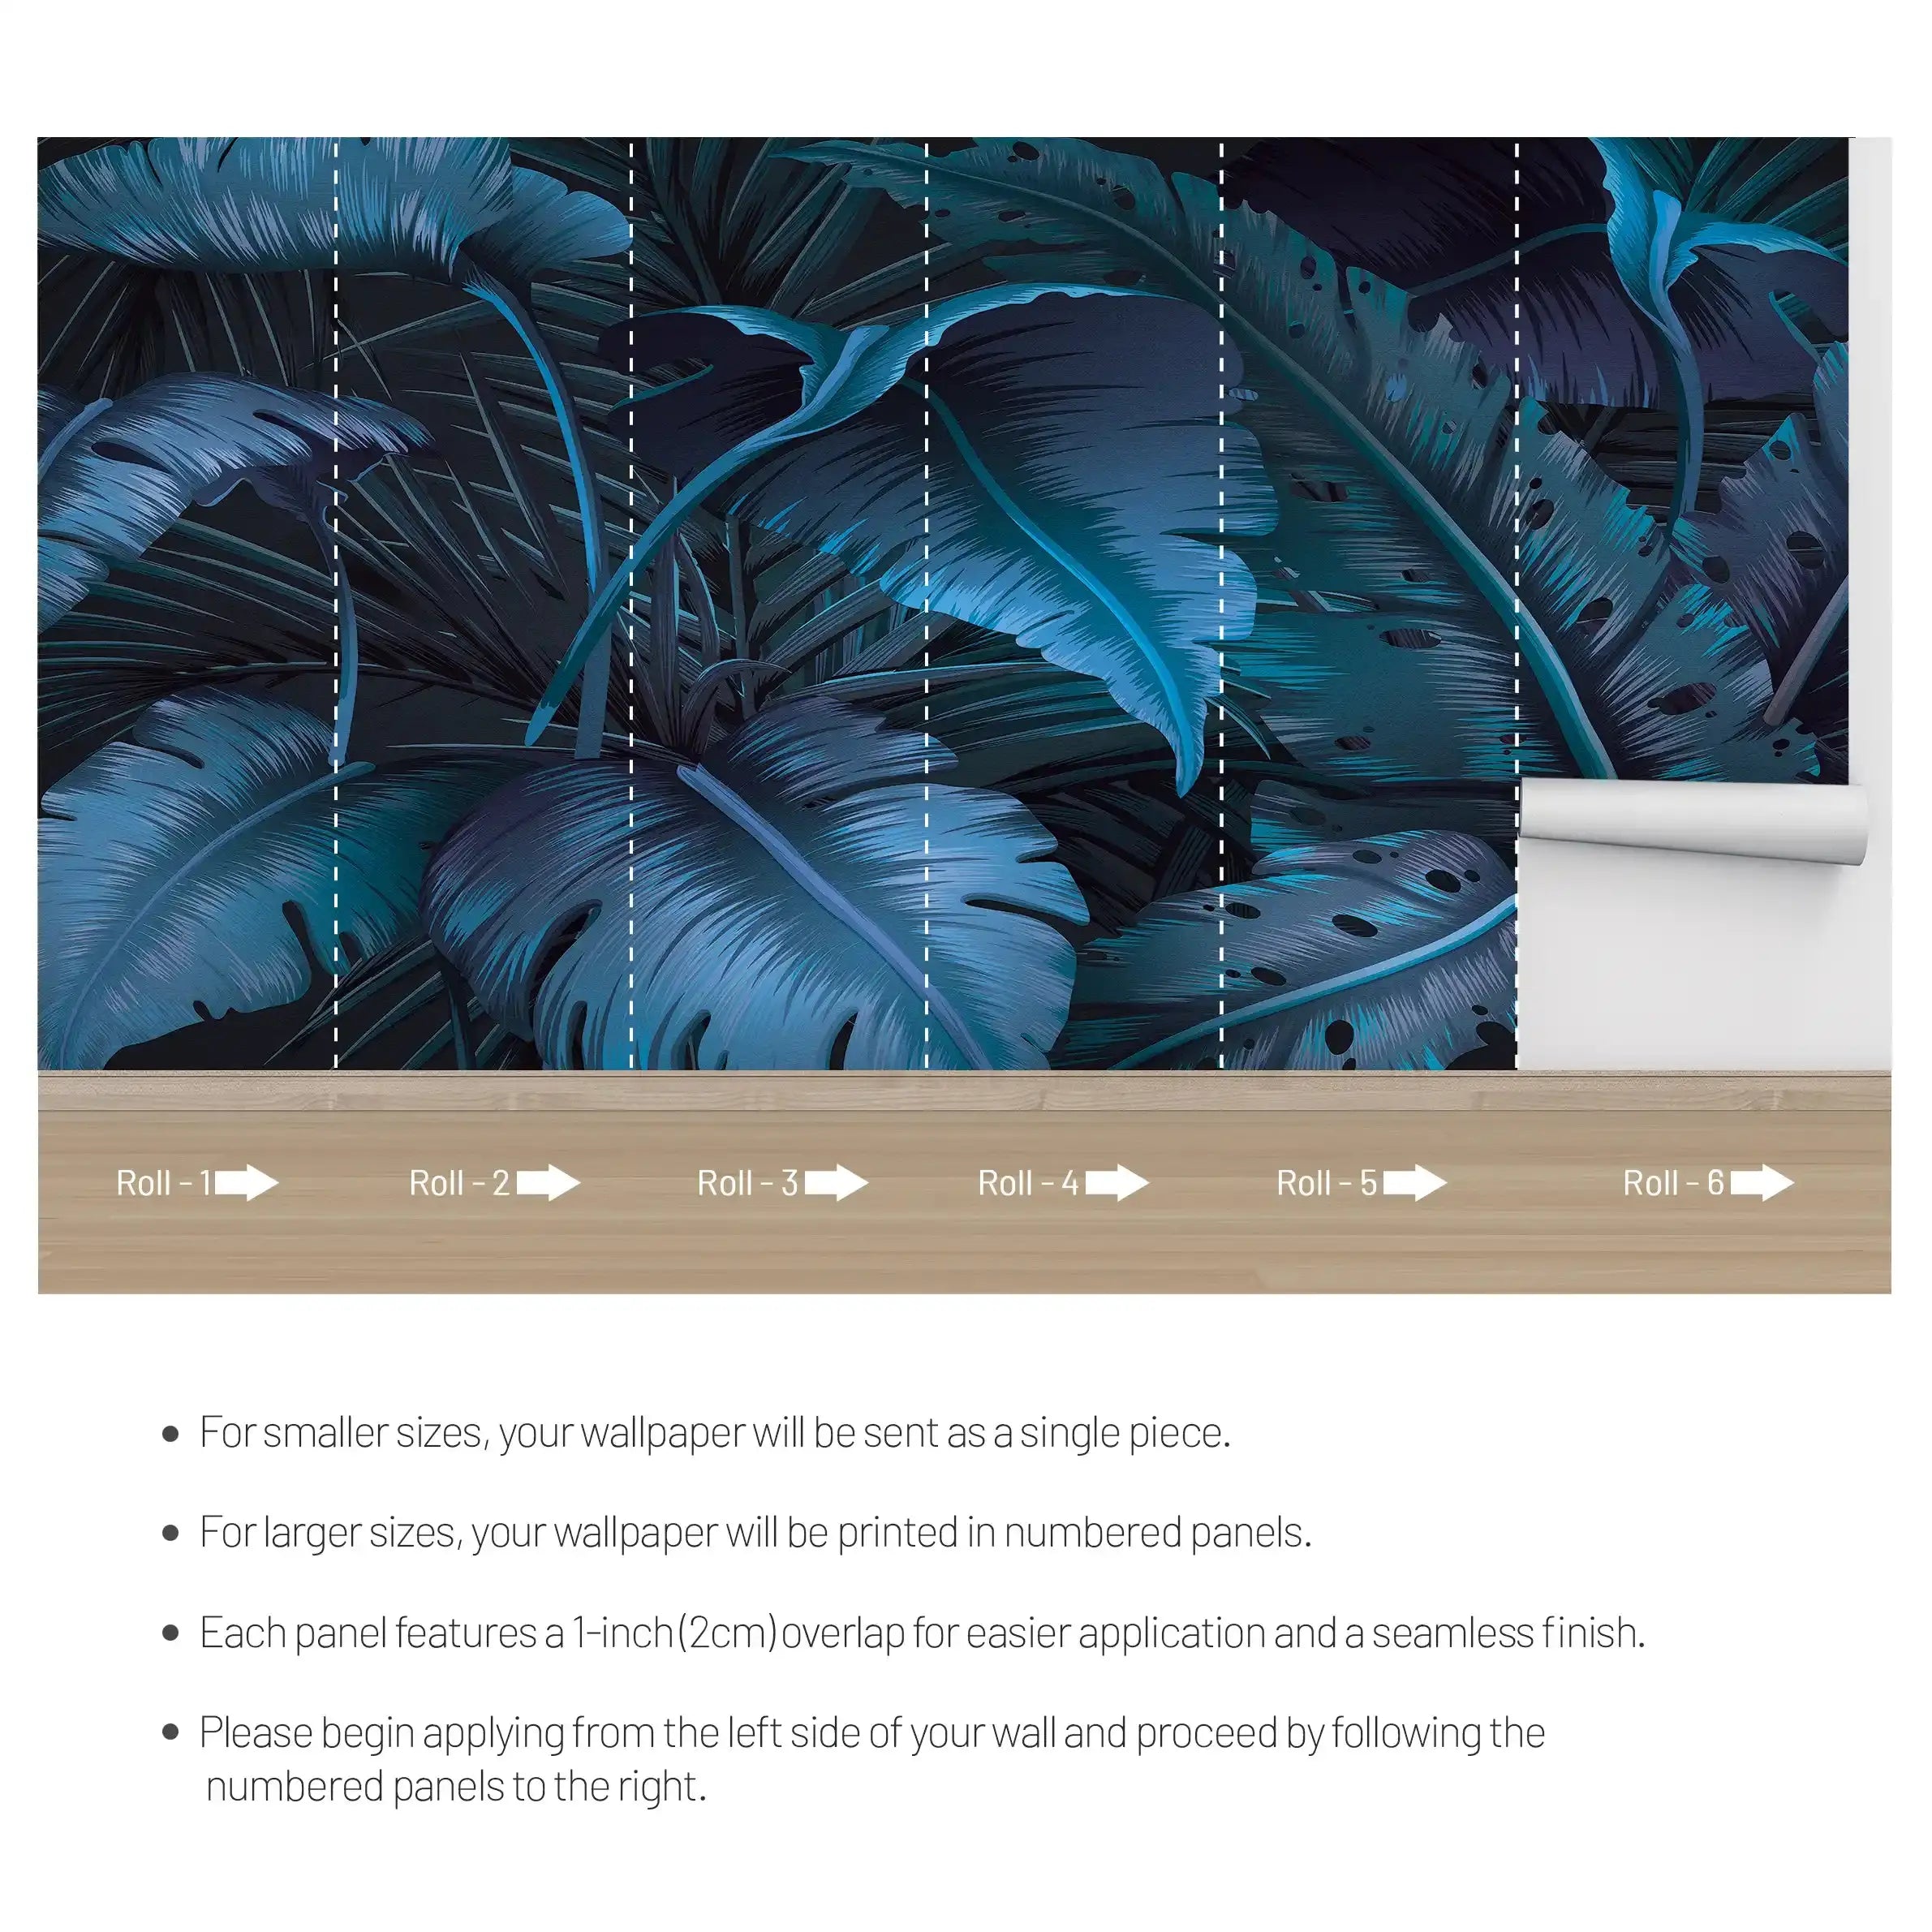 3050-D / Botanical Adhesive Wallpaper: Jungle Leaf Design, Easy Peel and Stick for Walls & Murals - Artevella